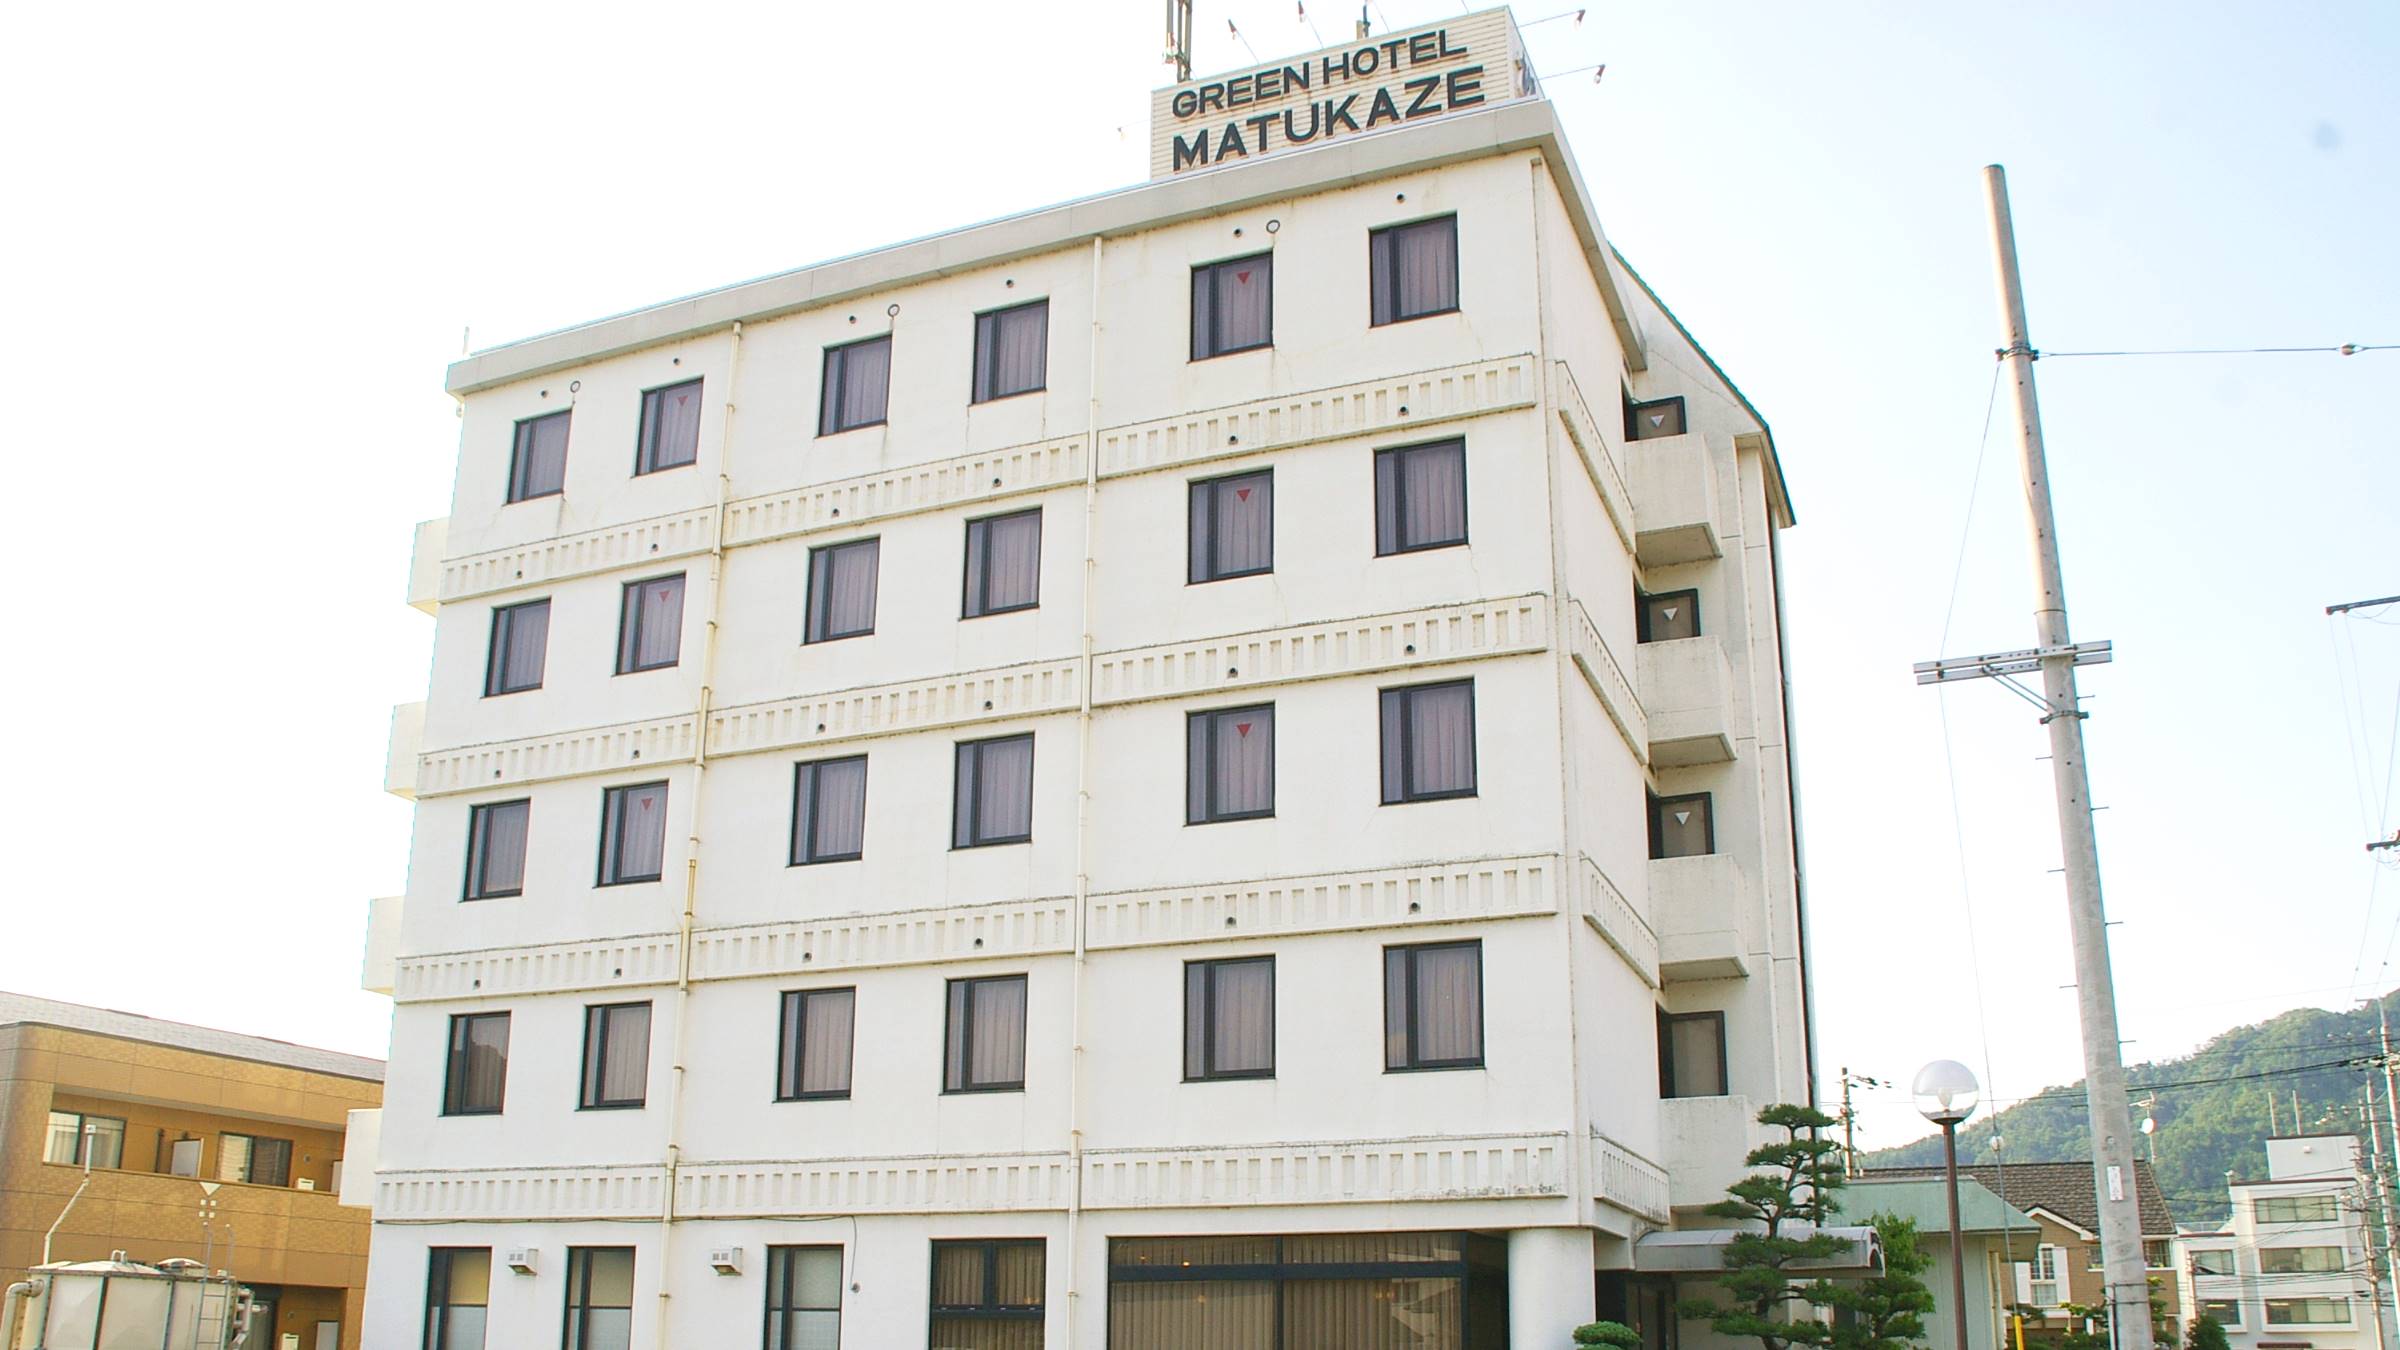 Tamba Green Hotel Matsukaze